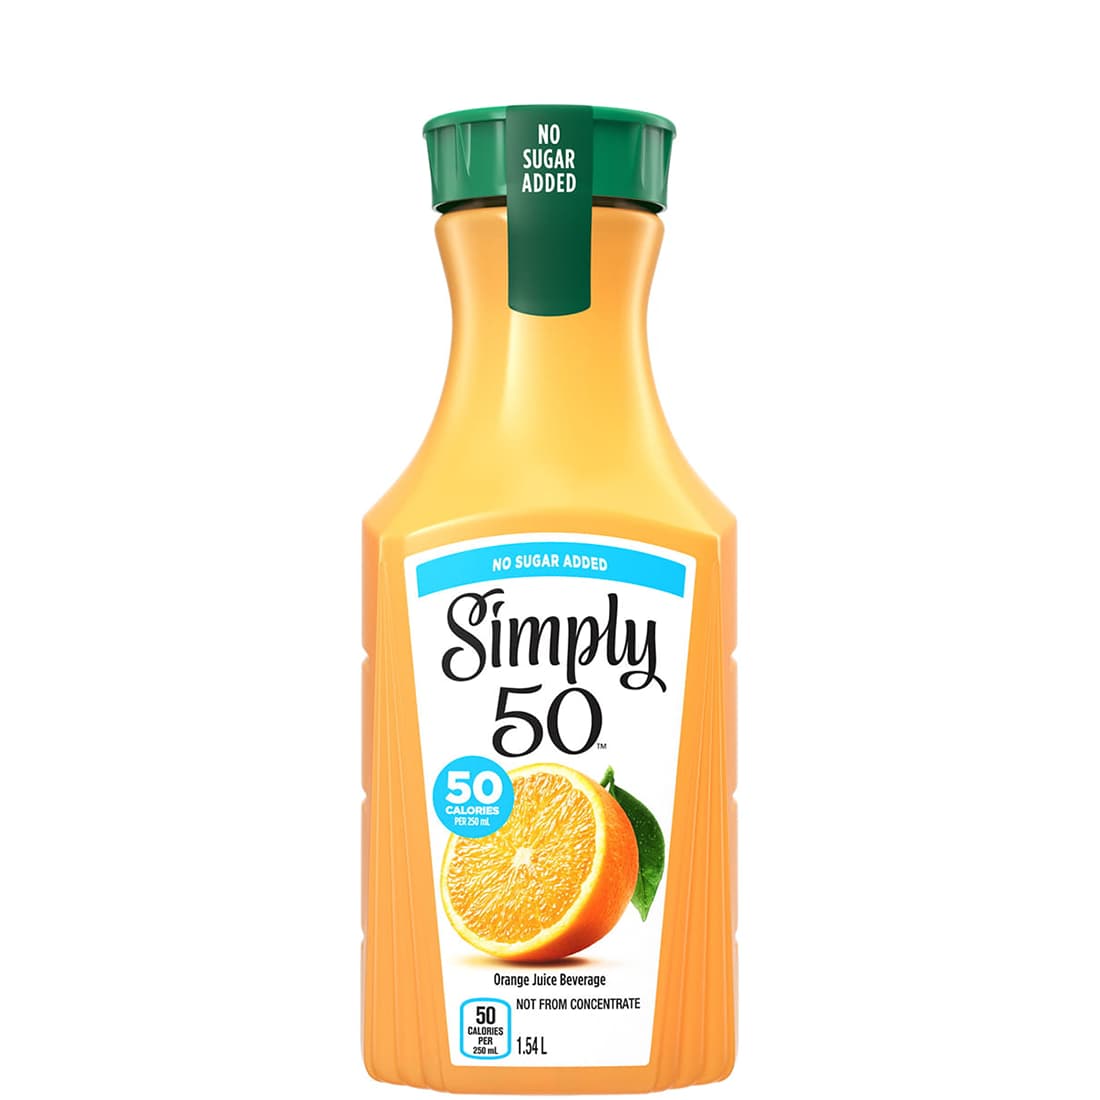 Simply 50 bottle